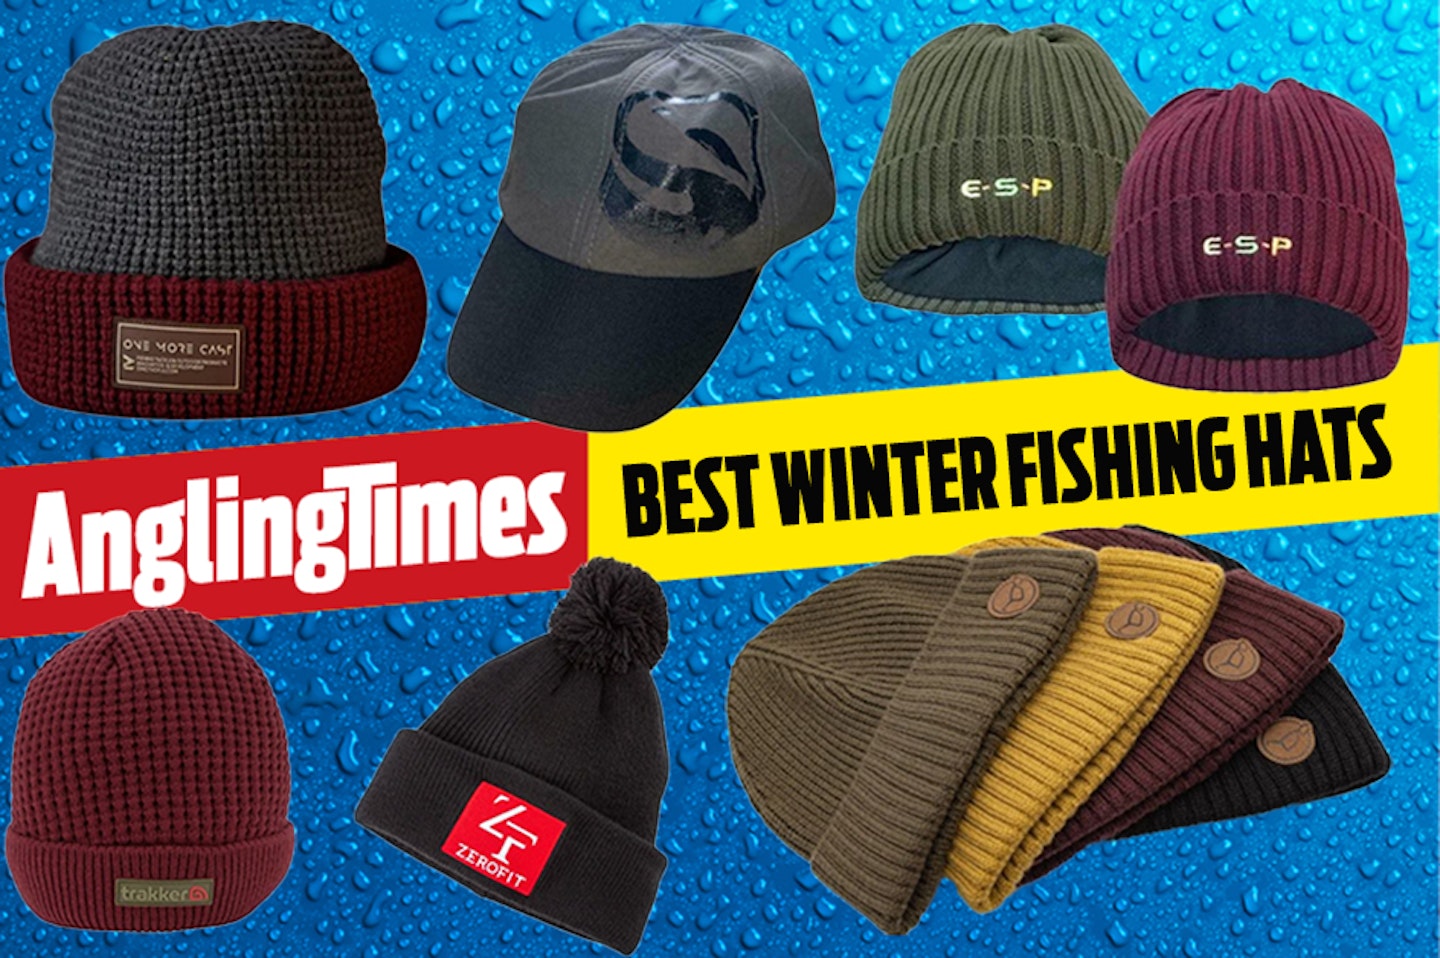 The best winter fishing hats